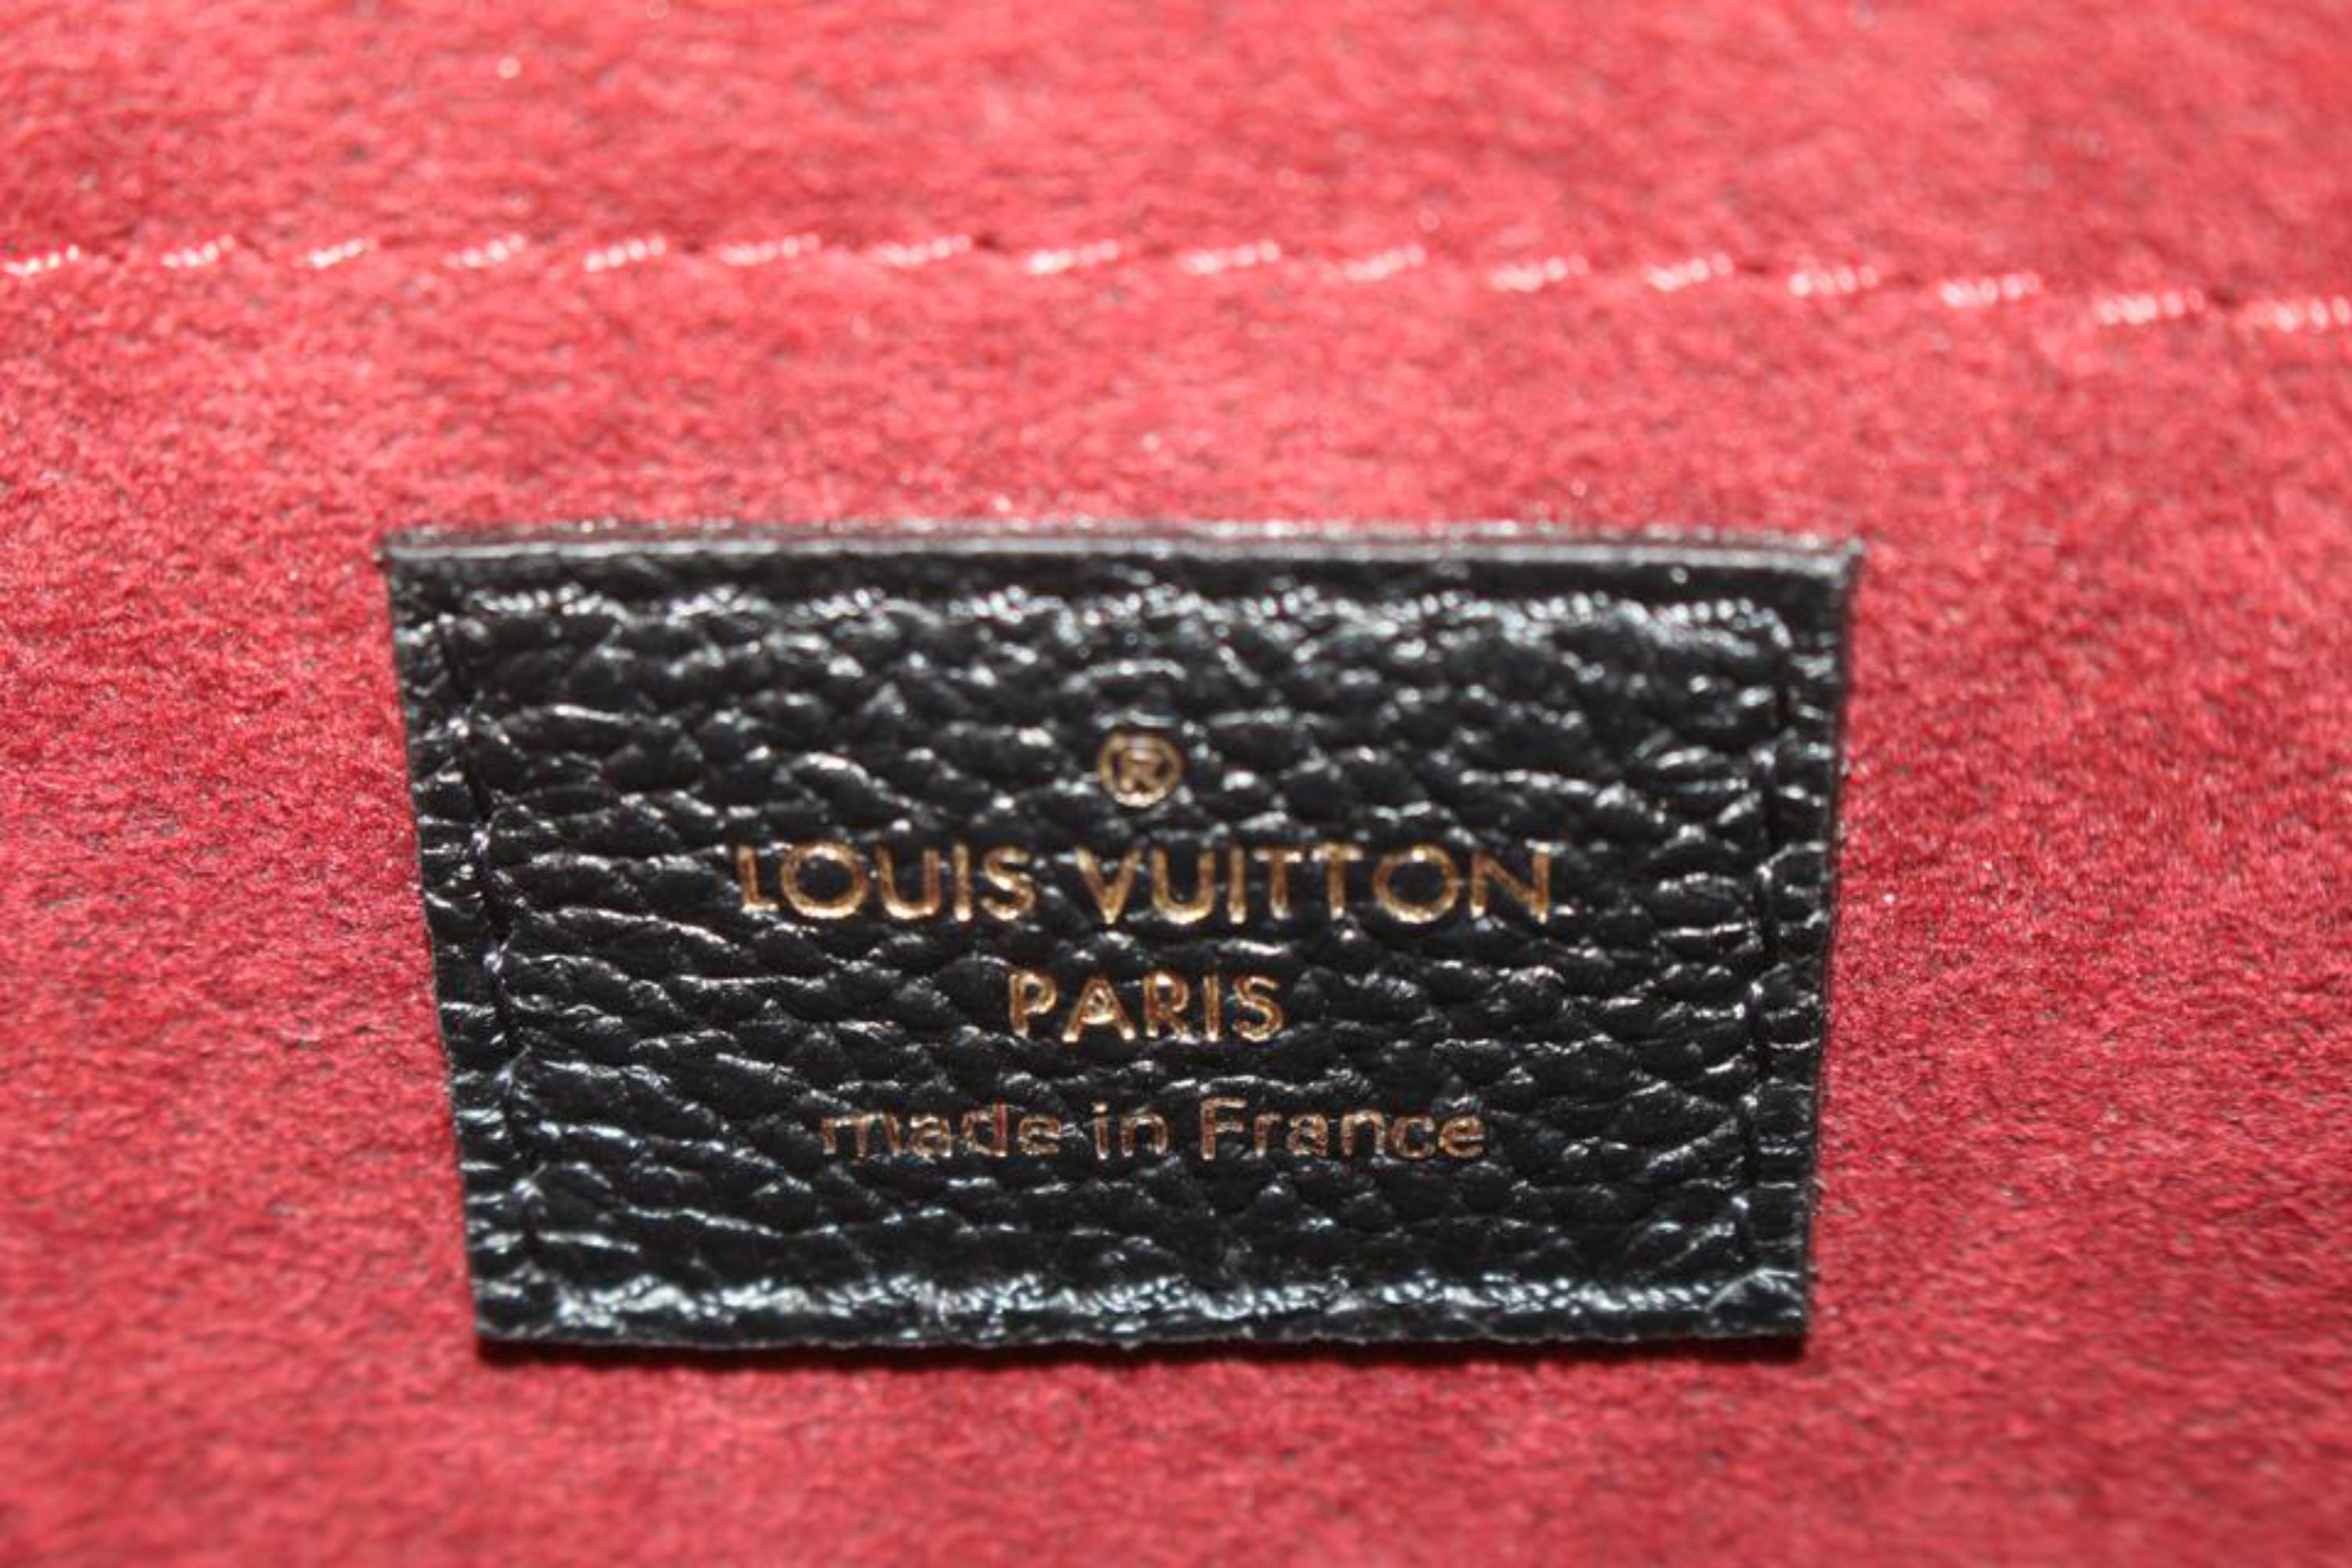 LOUIS VUITTON Paris Made in France Rift shoulder bag bla…